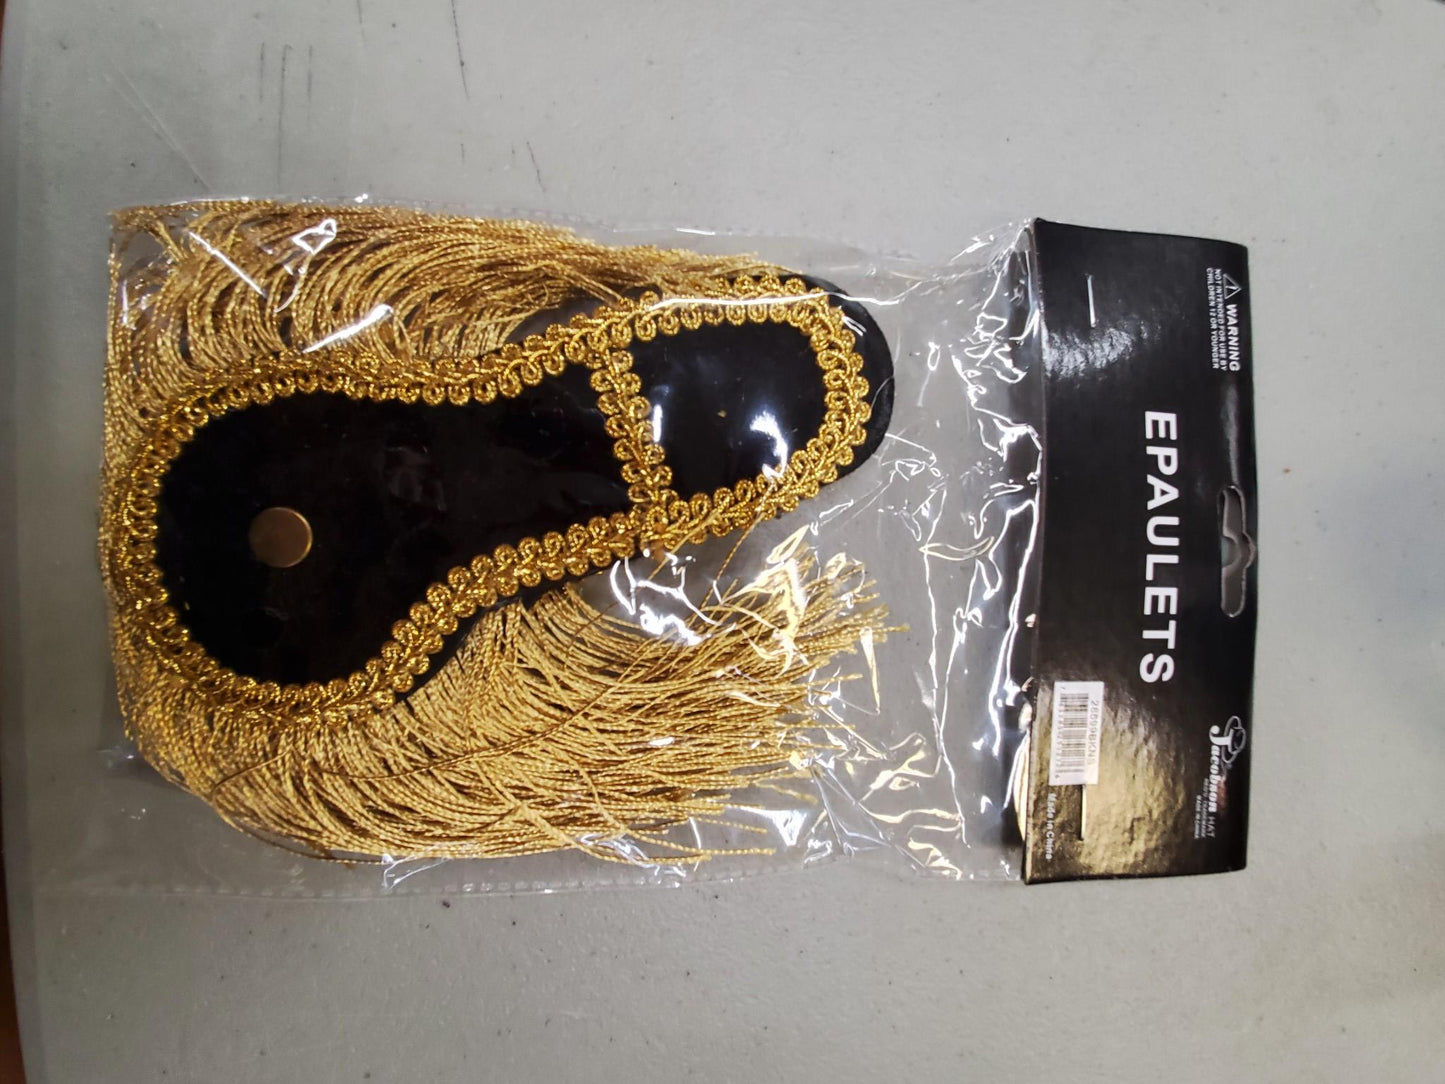 Epaulets - Military - Royalty - Pilot - Black/Gold - Costume Accessory